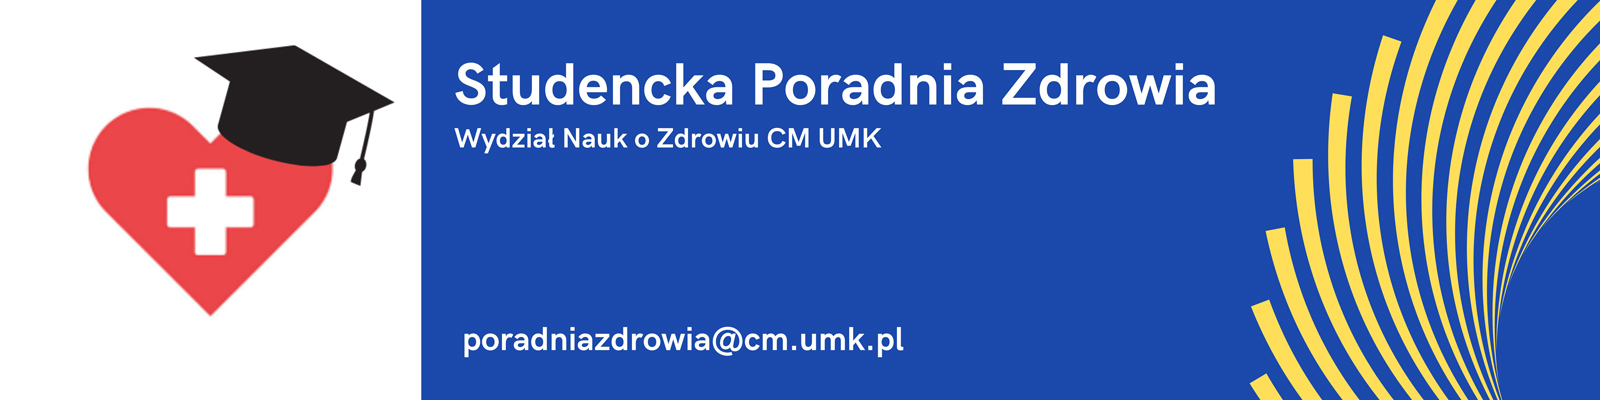 poradnia-zdrowia-banner-small-01.jpg